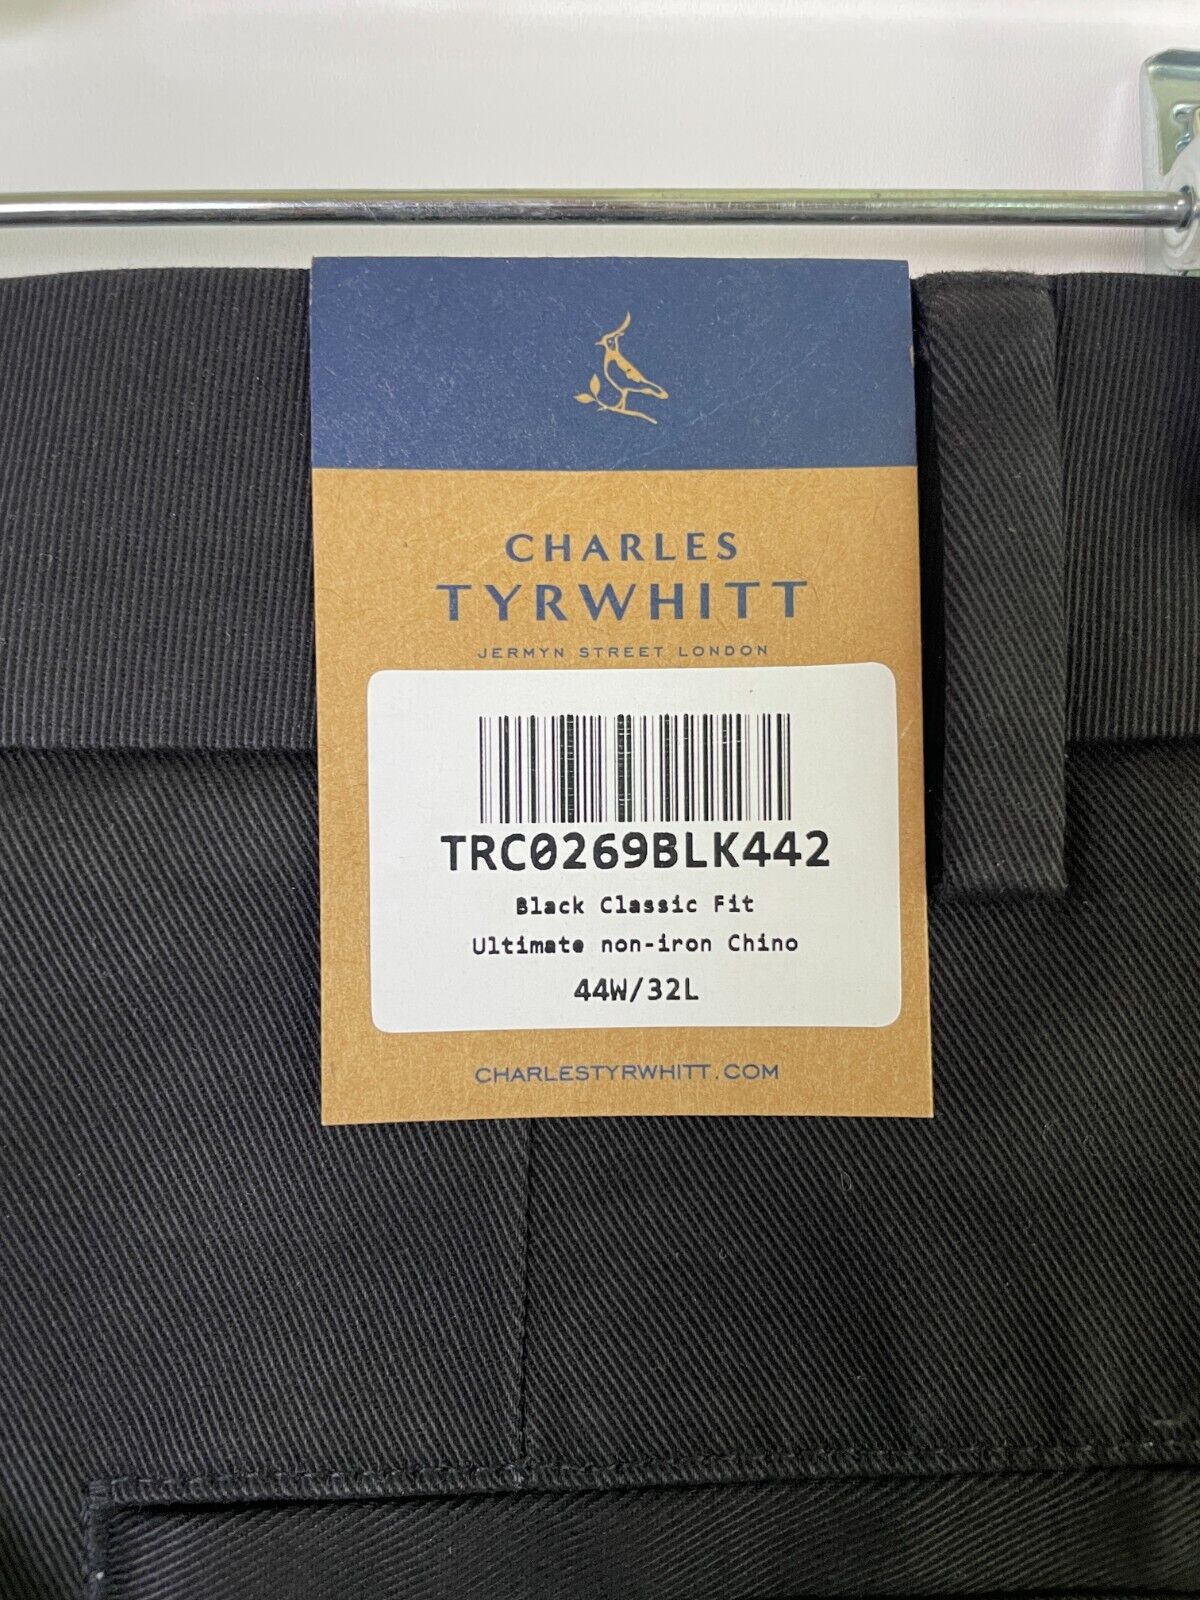 Charles Tyrwhitt Mens 44W/32L Ultimate Non-Iron Chinos Black Dress Pant Khaki